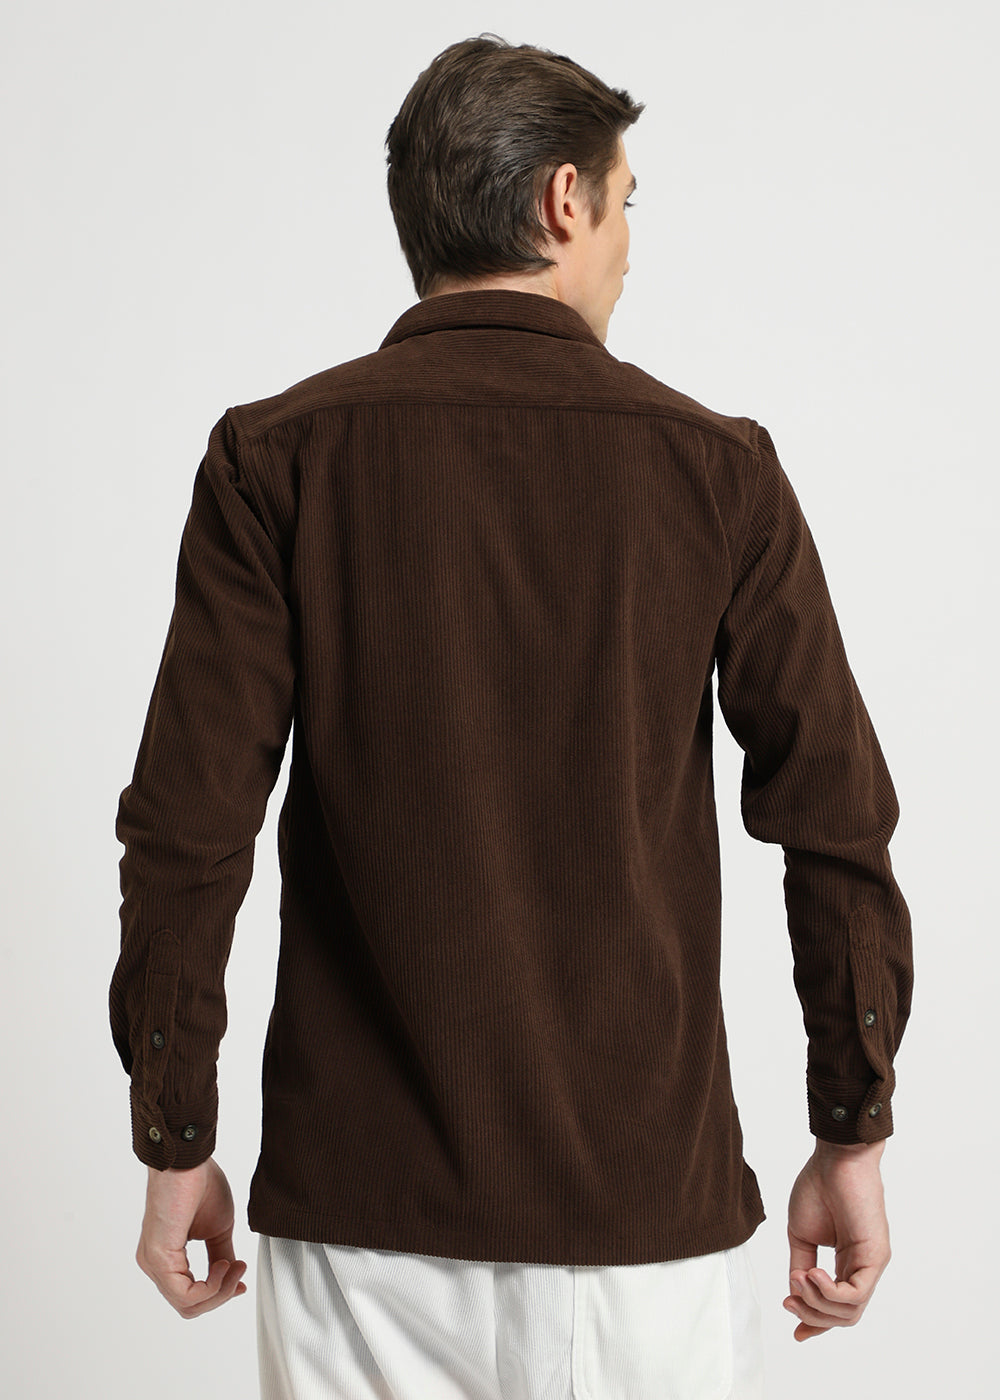 Mulch Brown Corduroy Shirt